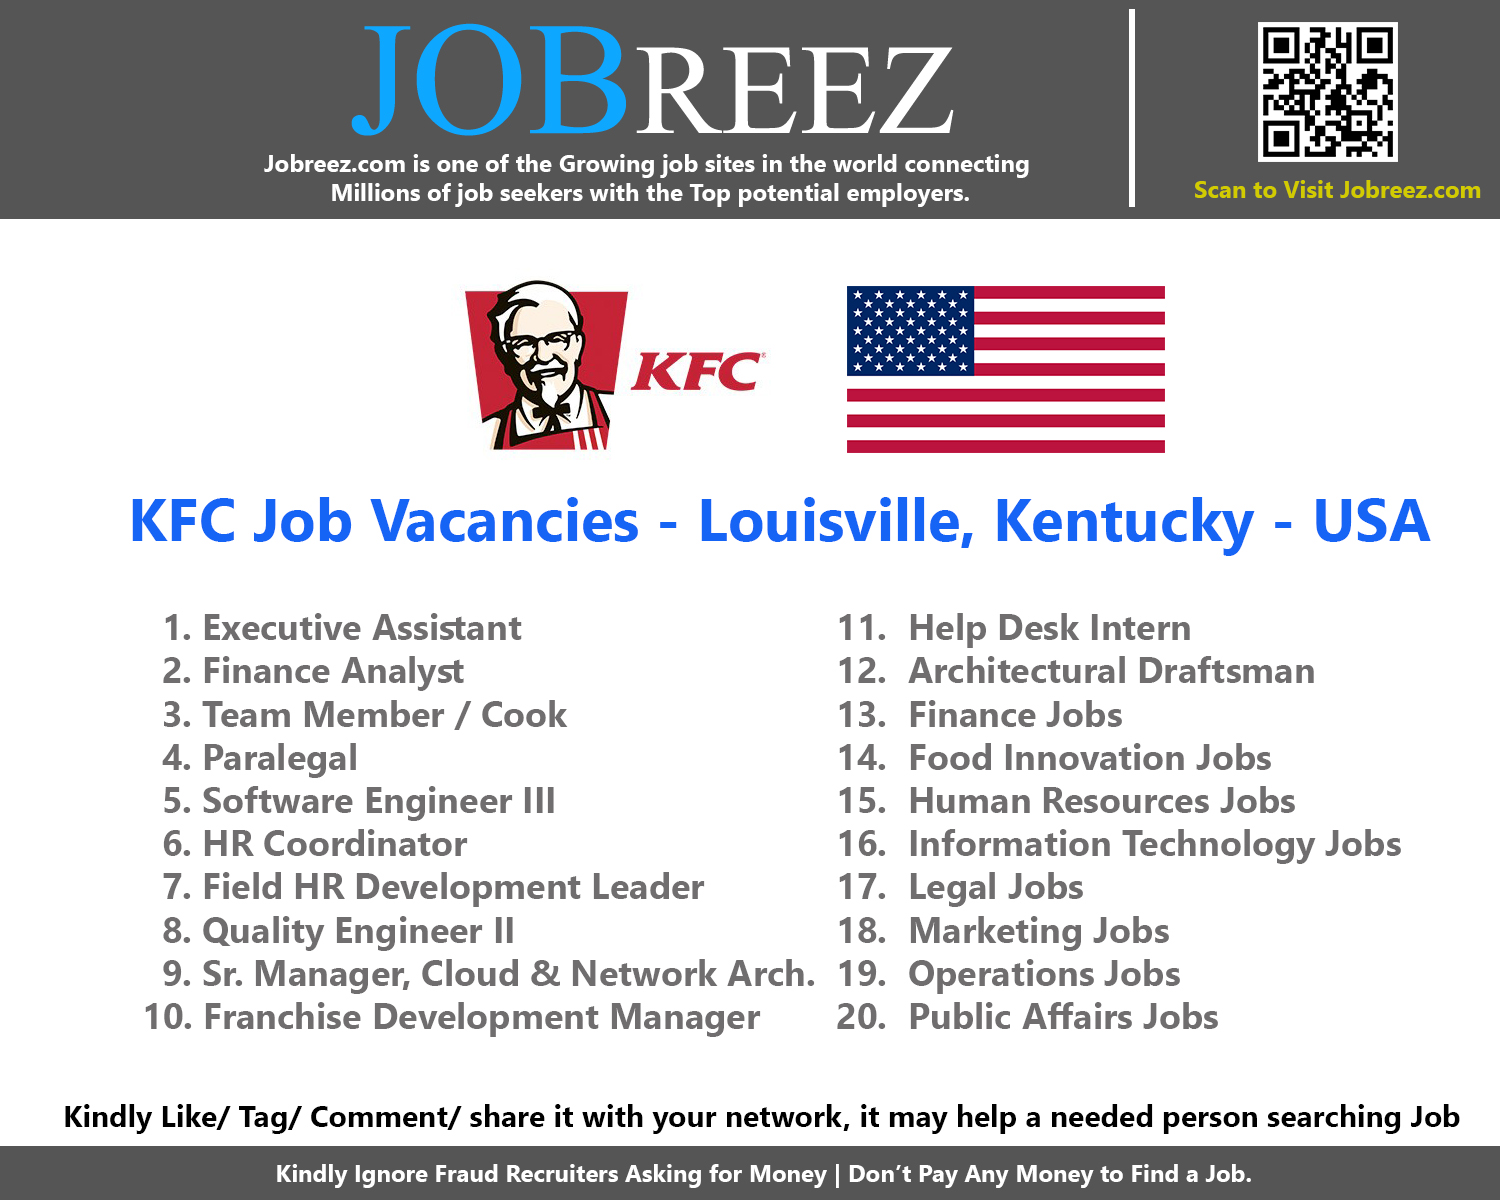 KFC Job Vacancies - Louisville, Kentucky - USA